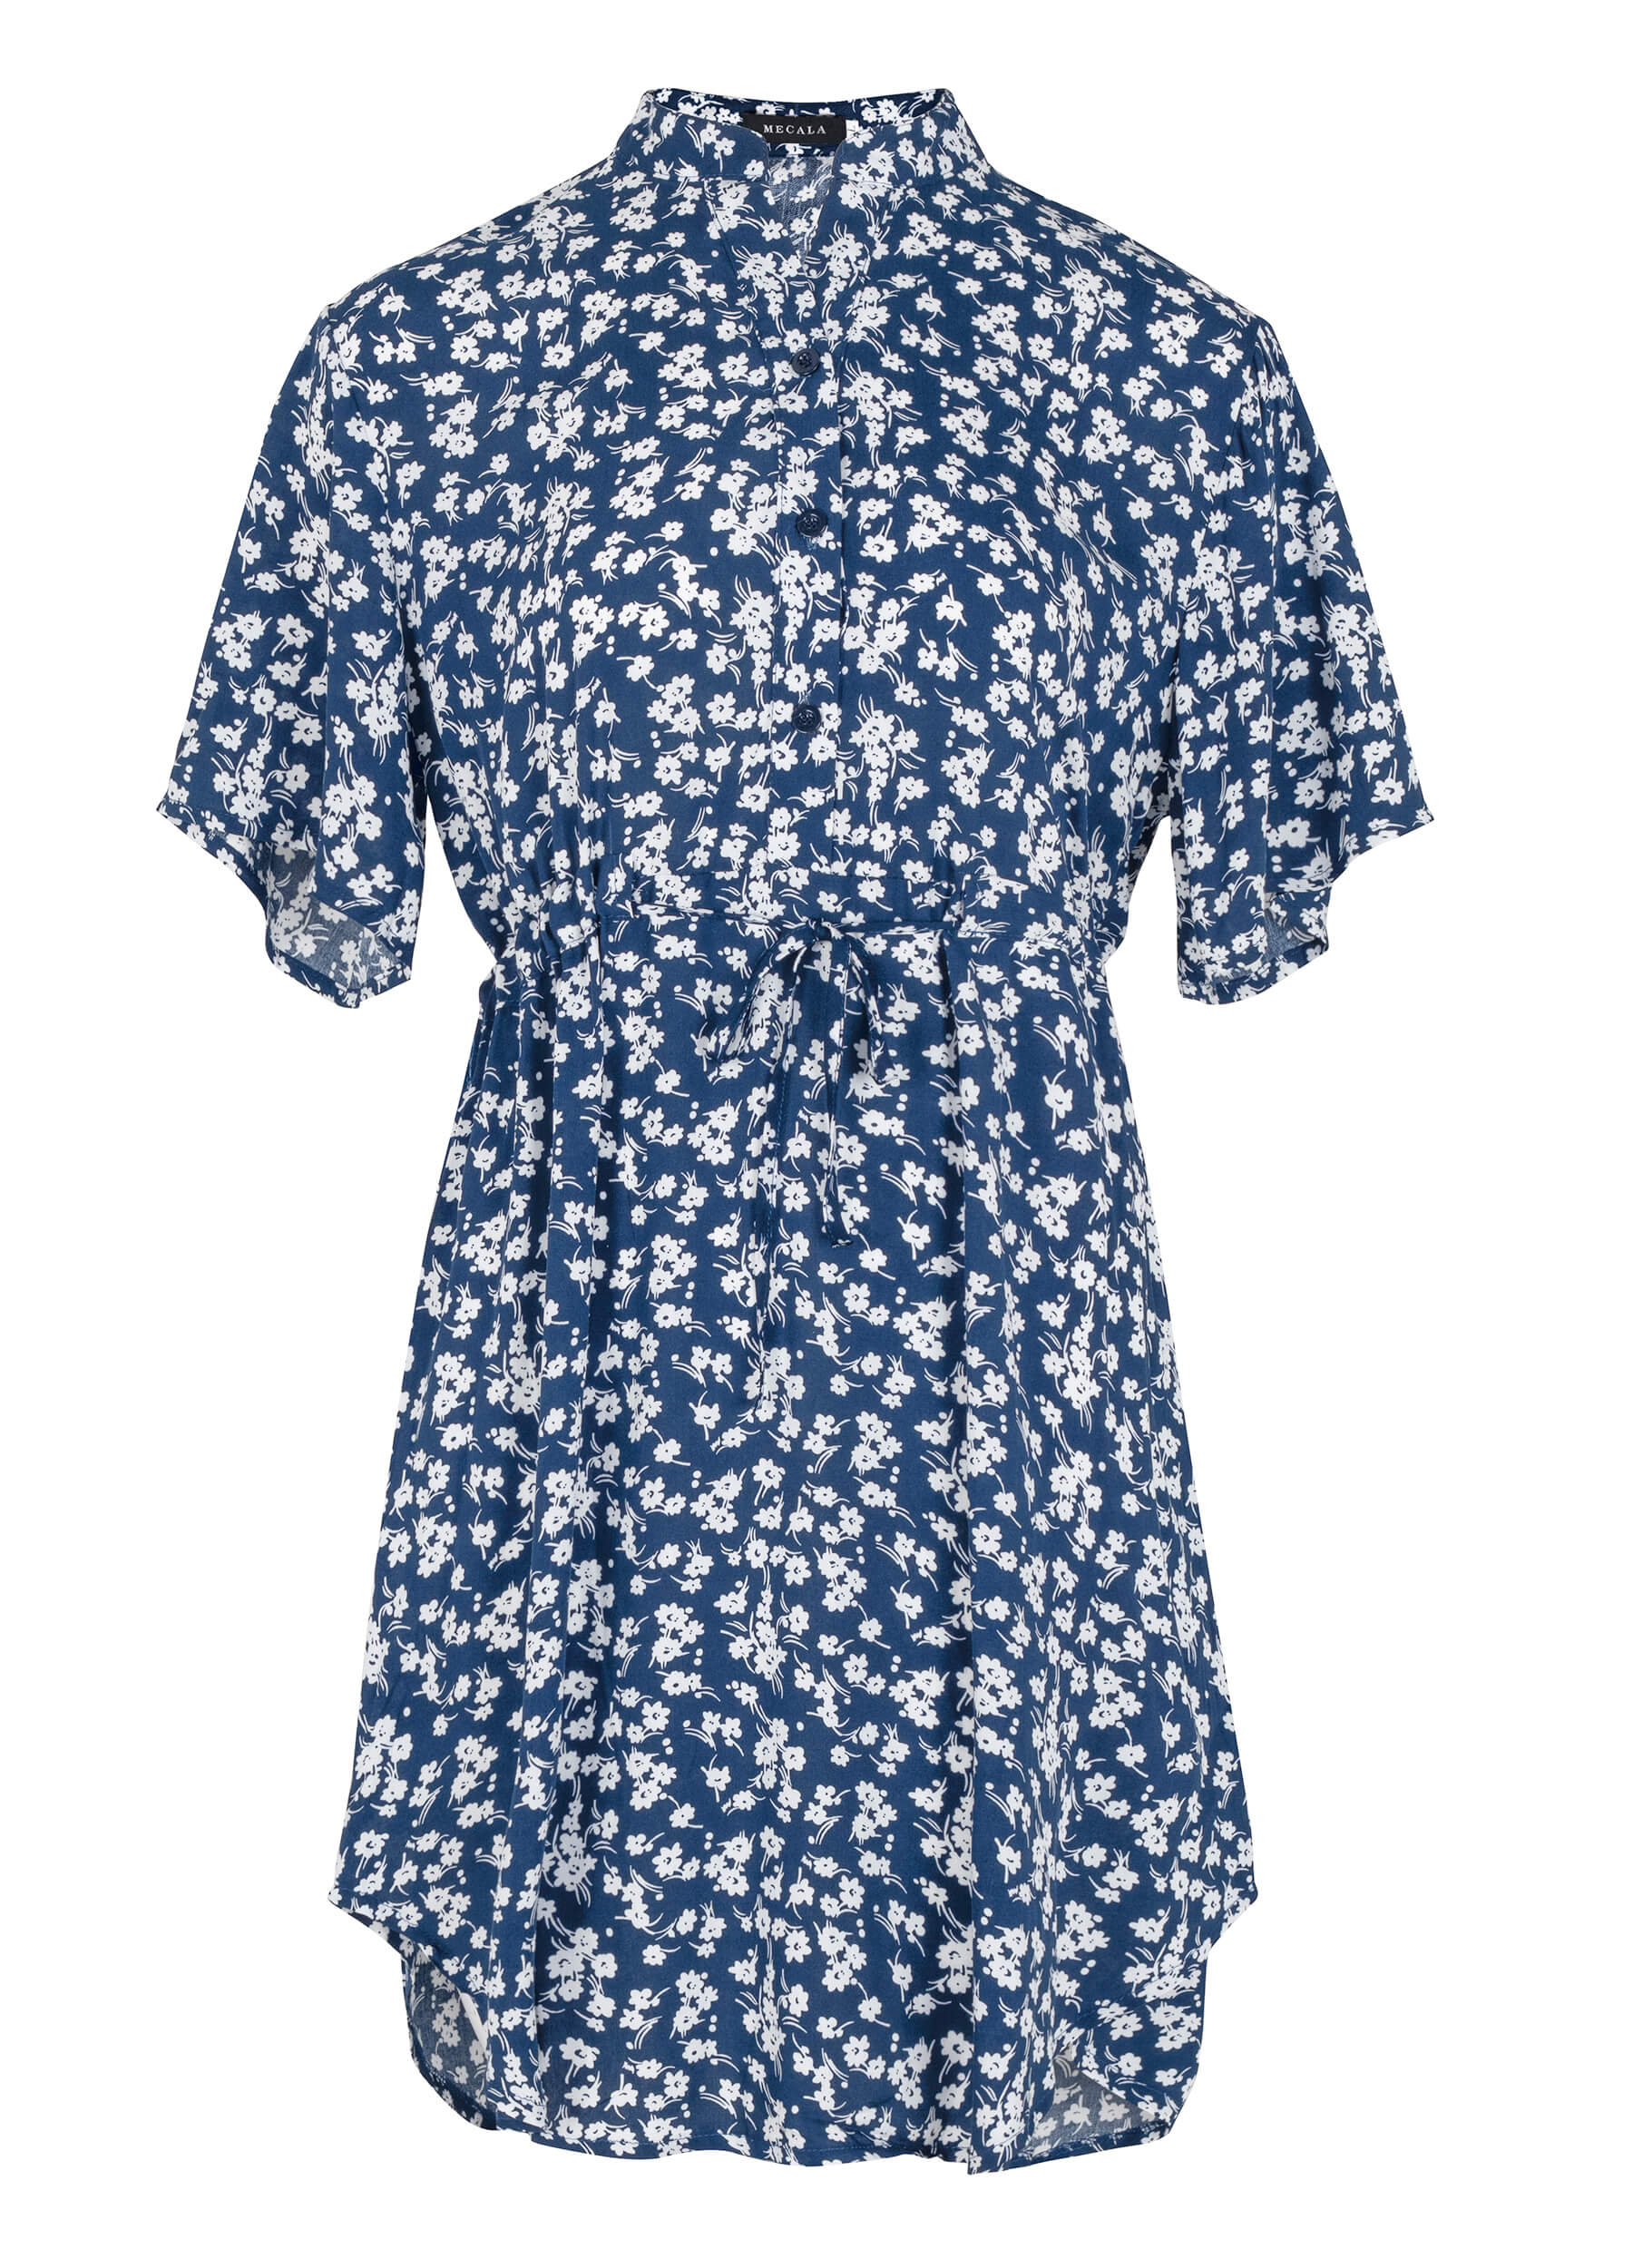 MECALA Women's Summer Floral Print V-Neck Short Sleeve Short Dress-Blue